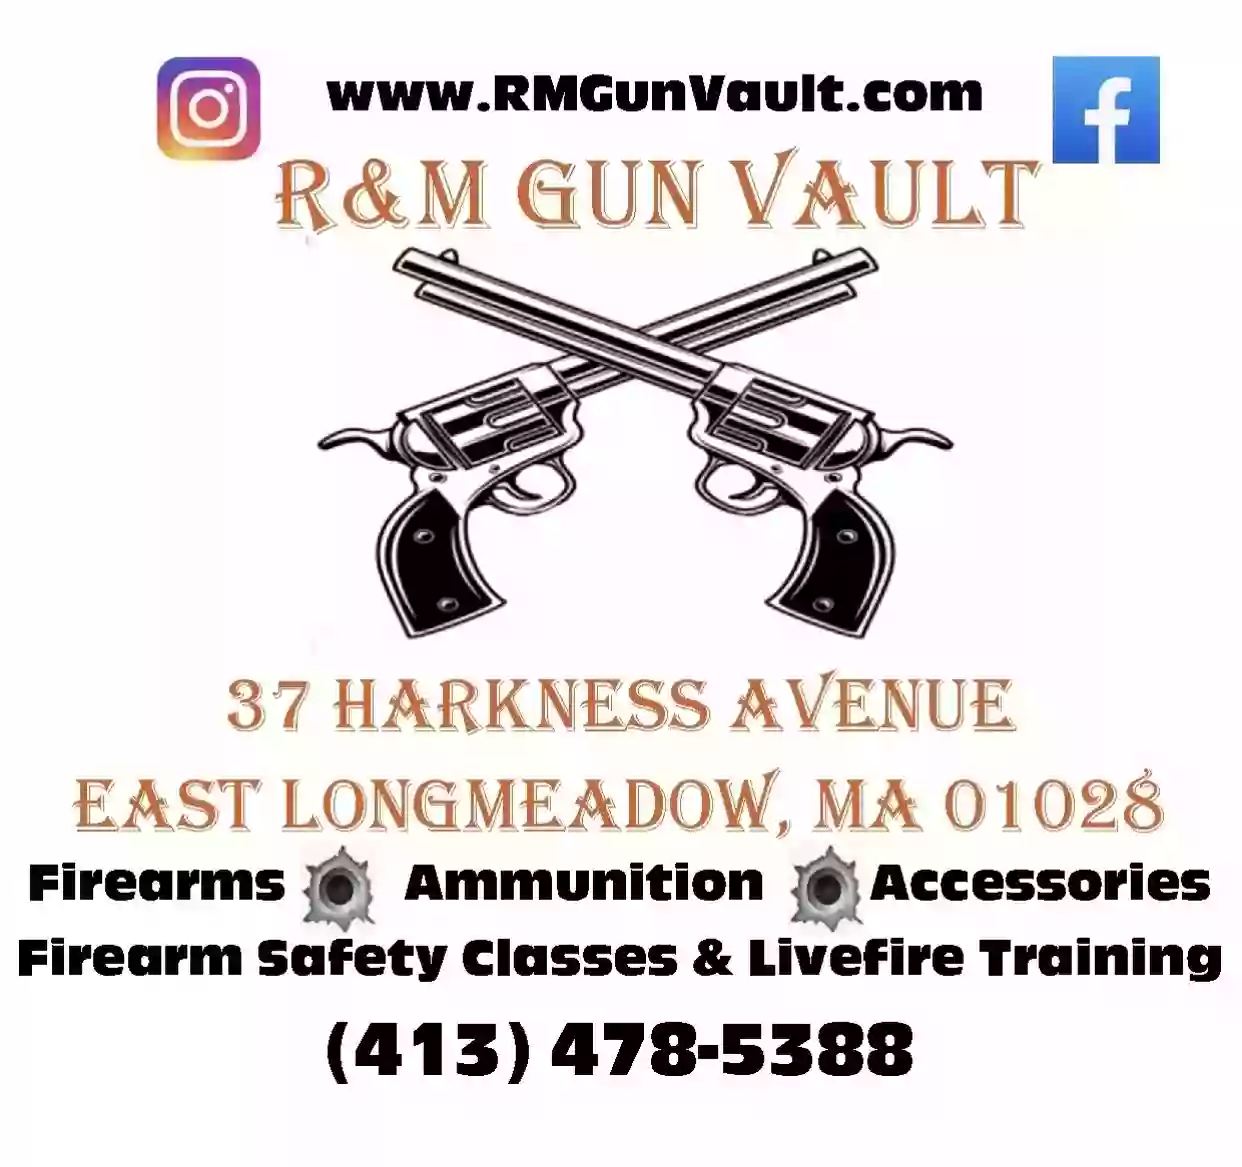 R&M Gun Vault